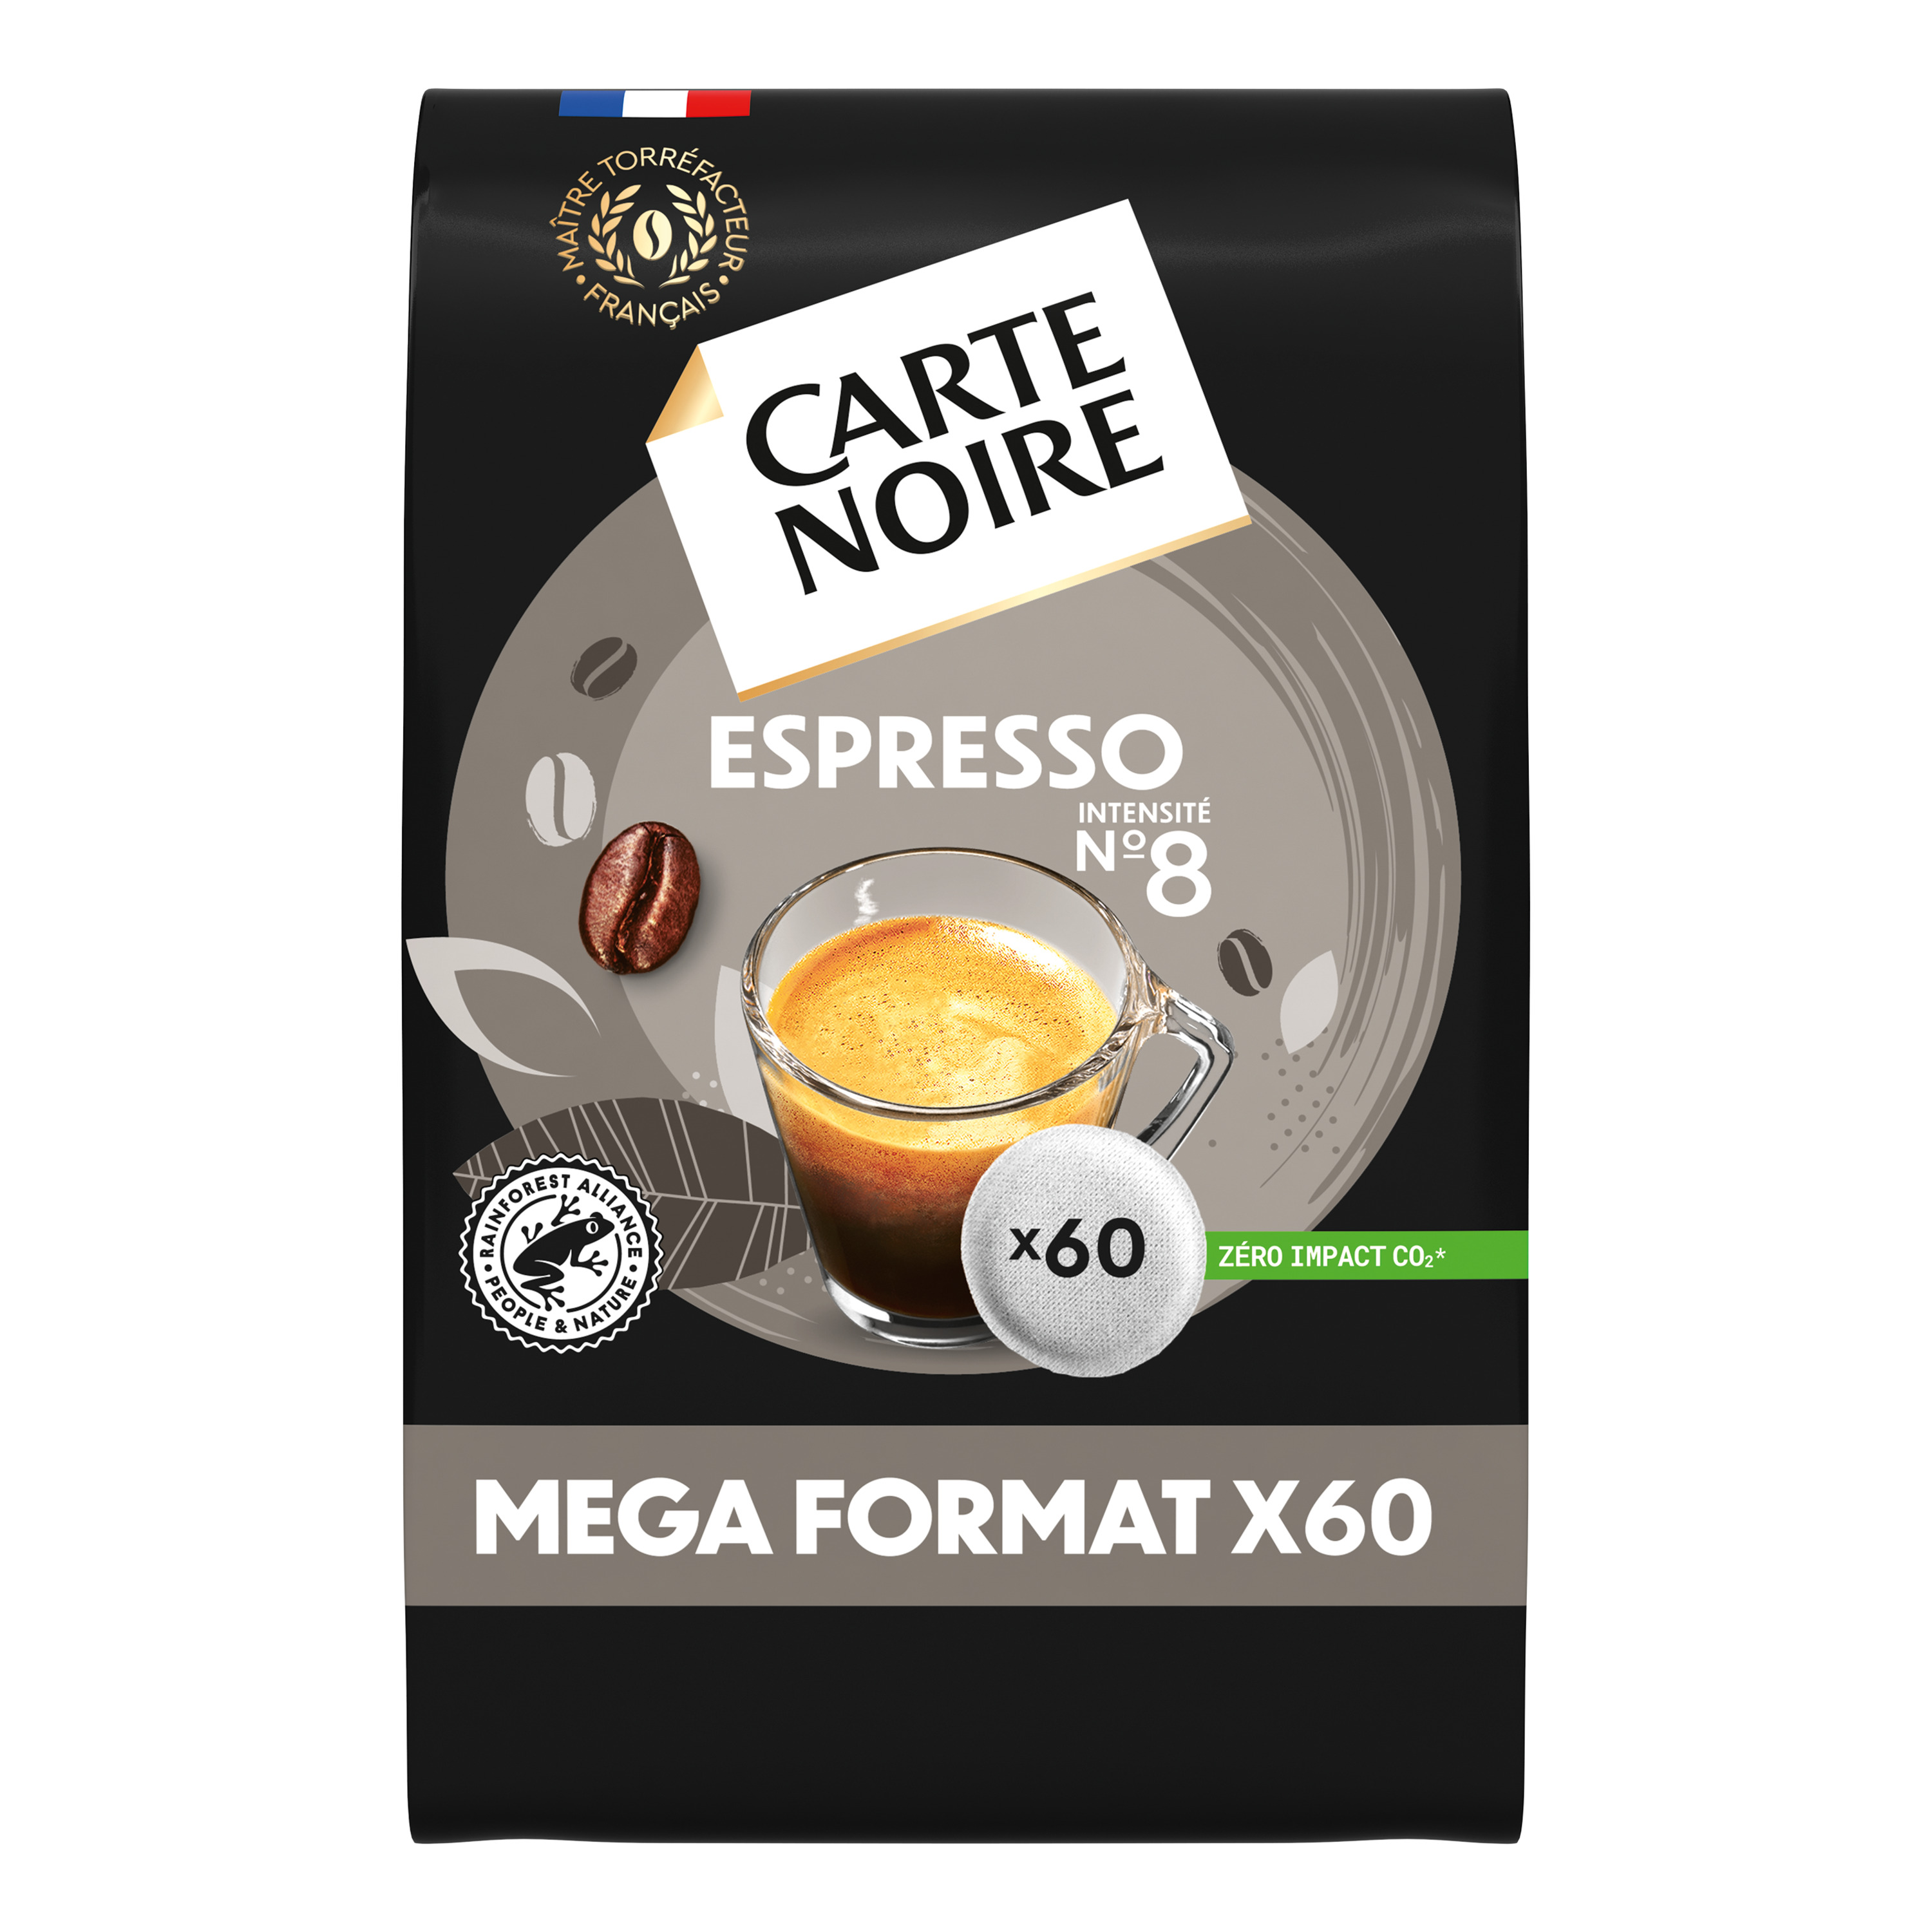 Dosettes de café Senseo Espresso Brazil - Paquet de 36 sur